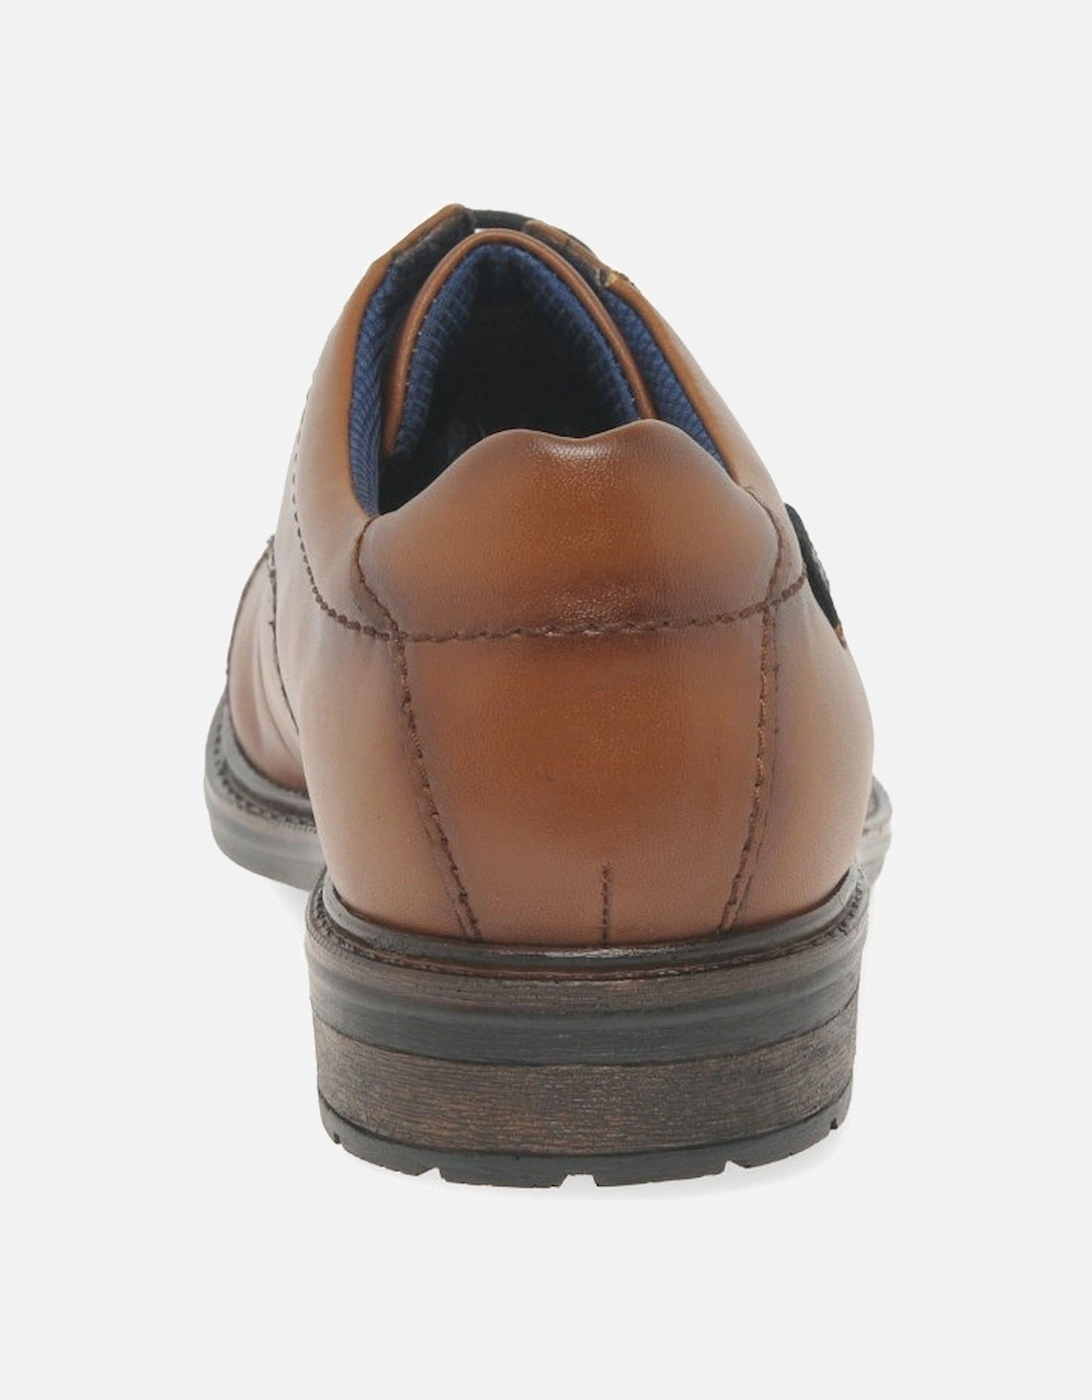 Ruggerio Cap Mens Formal Shoes